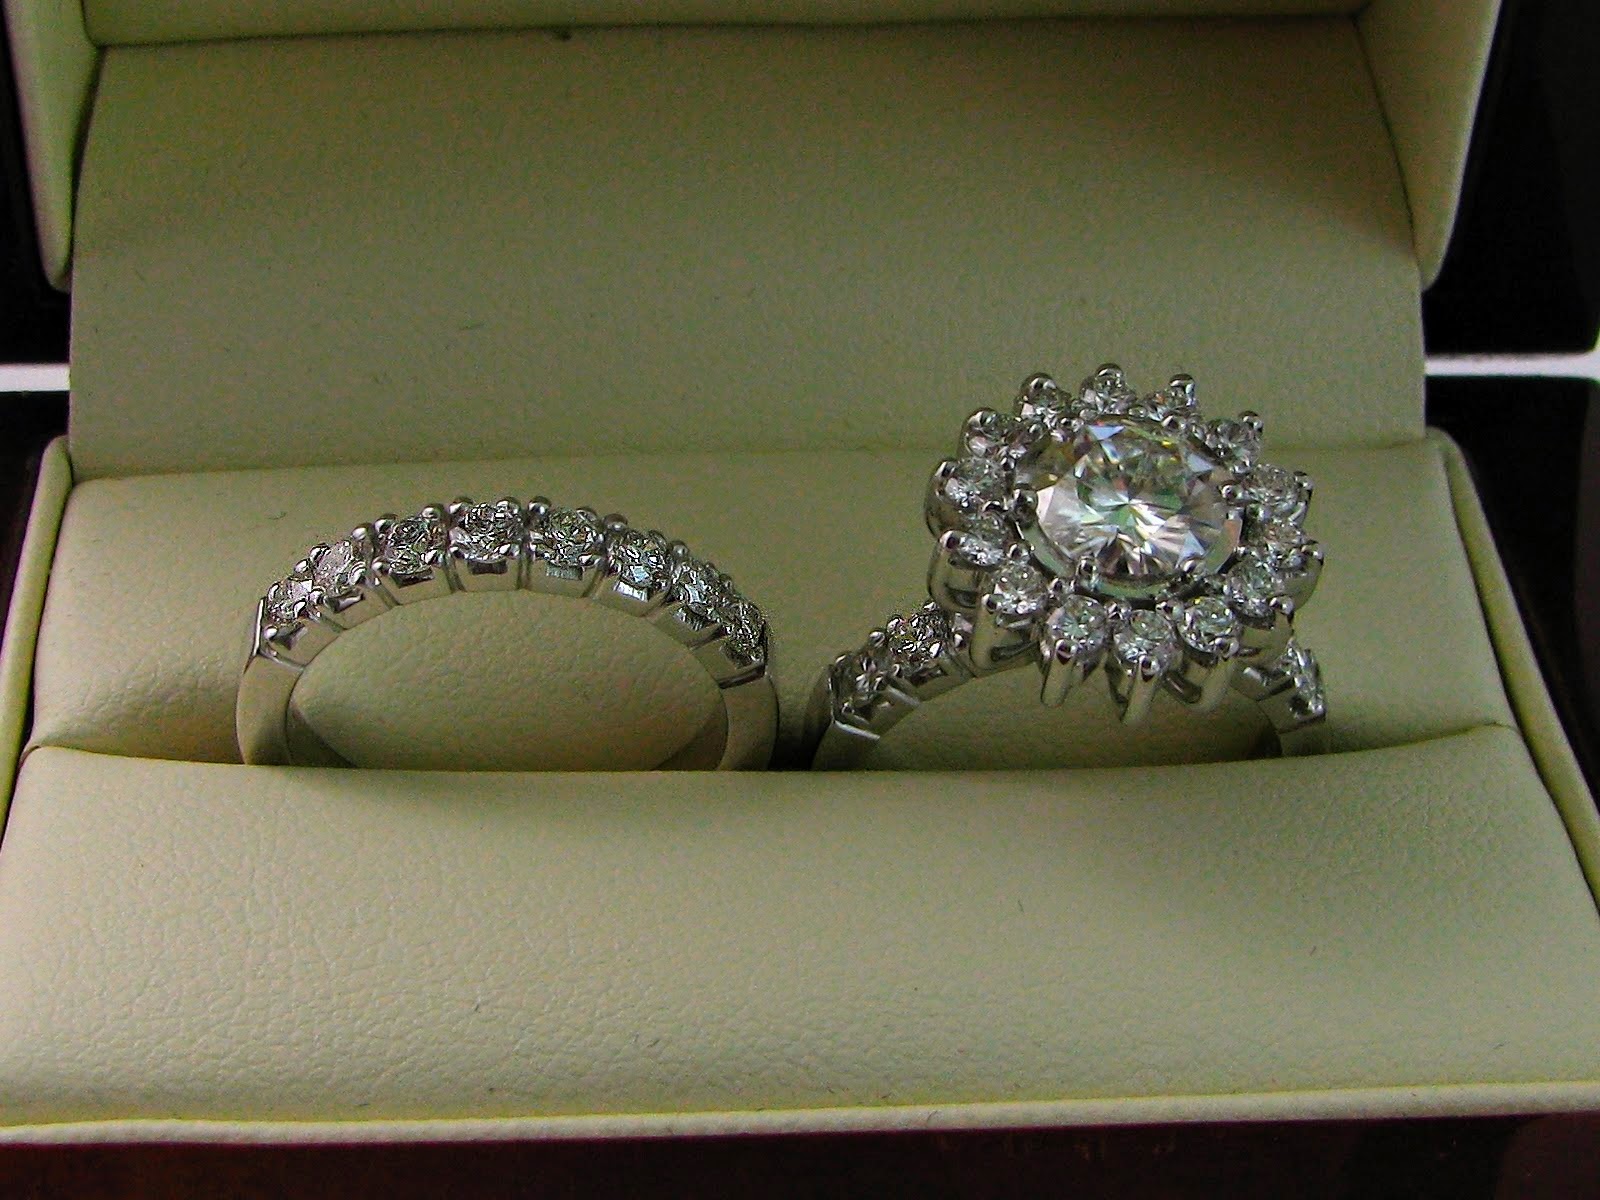 Wedding and engagement ring set